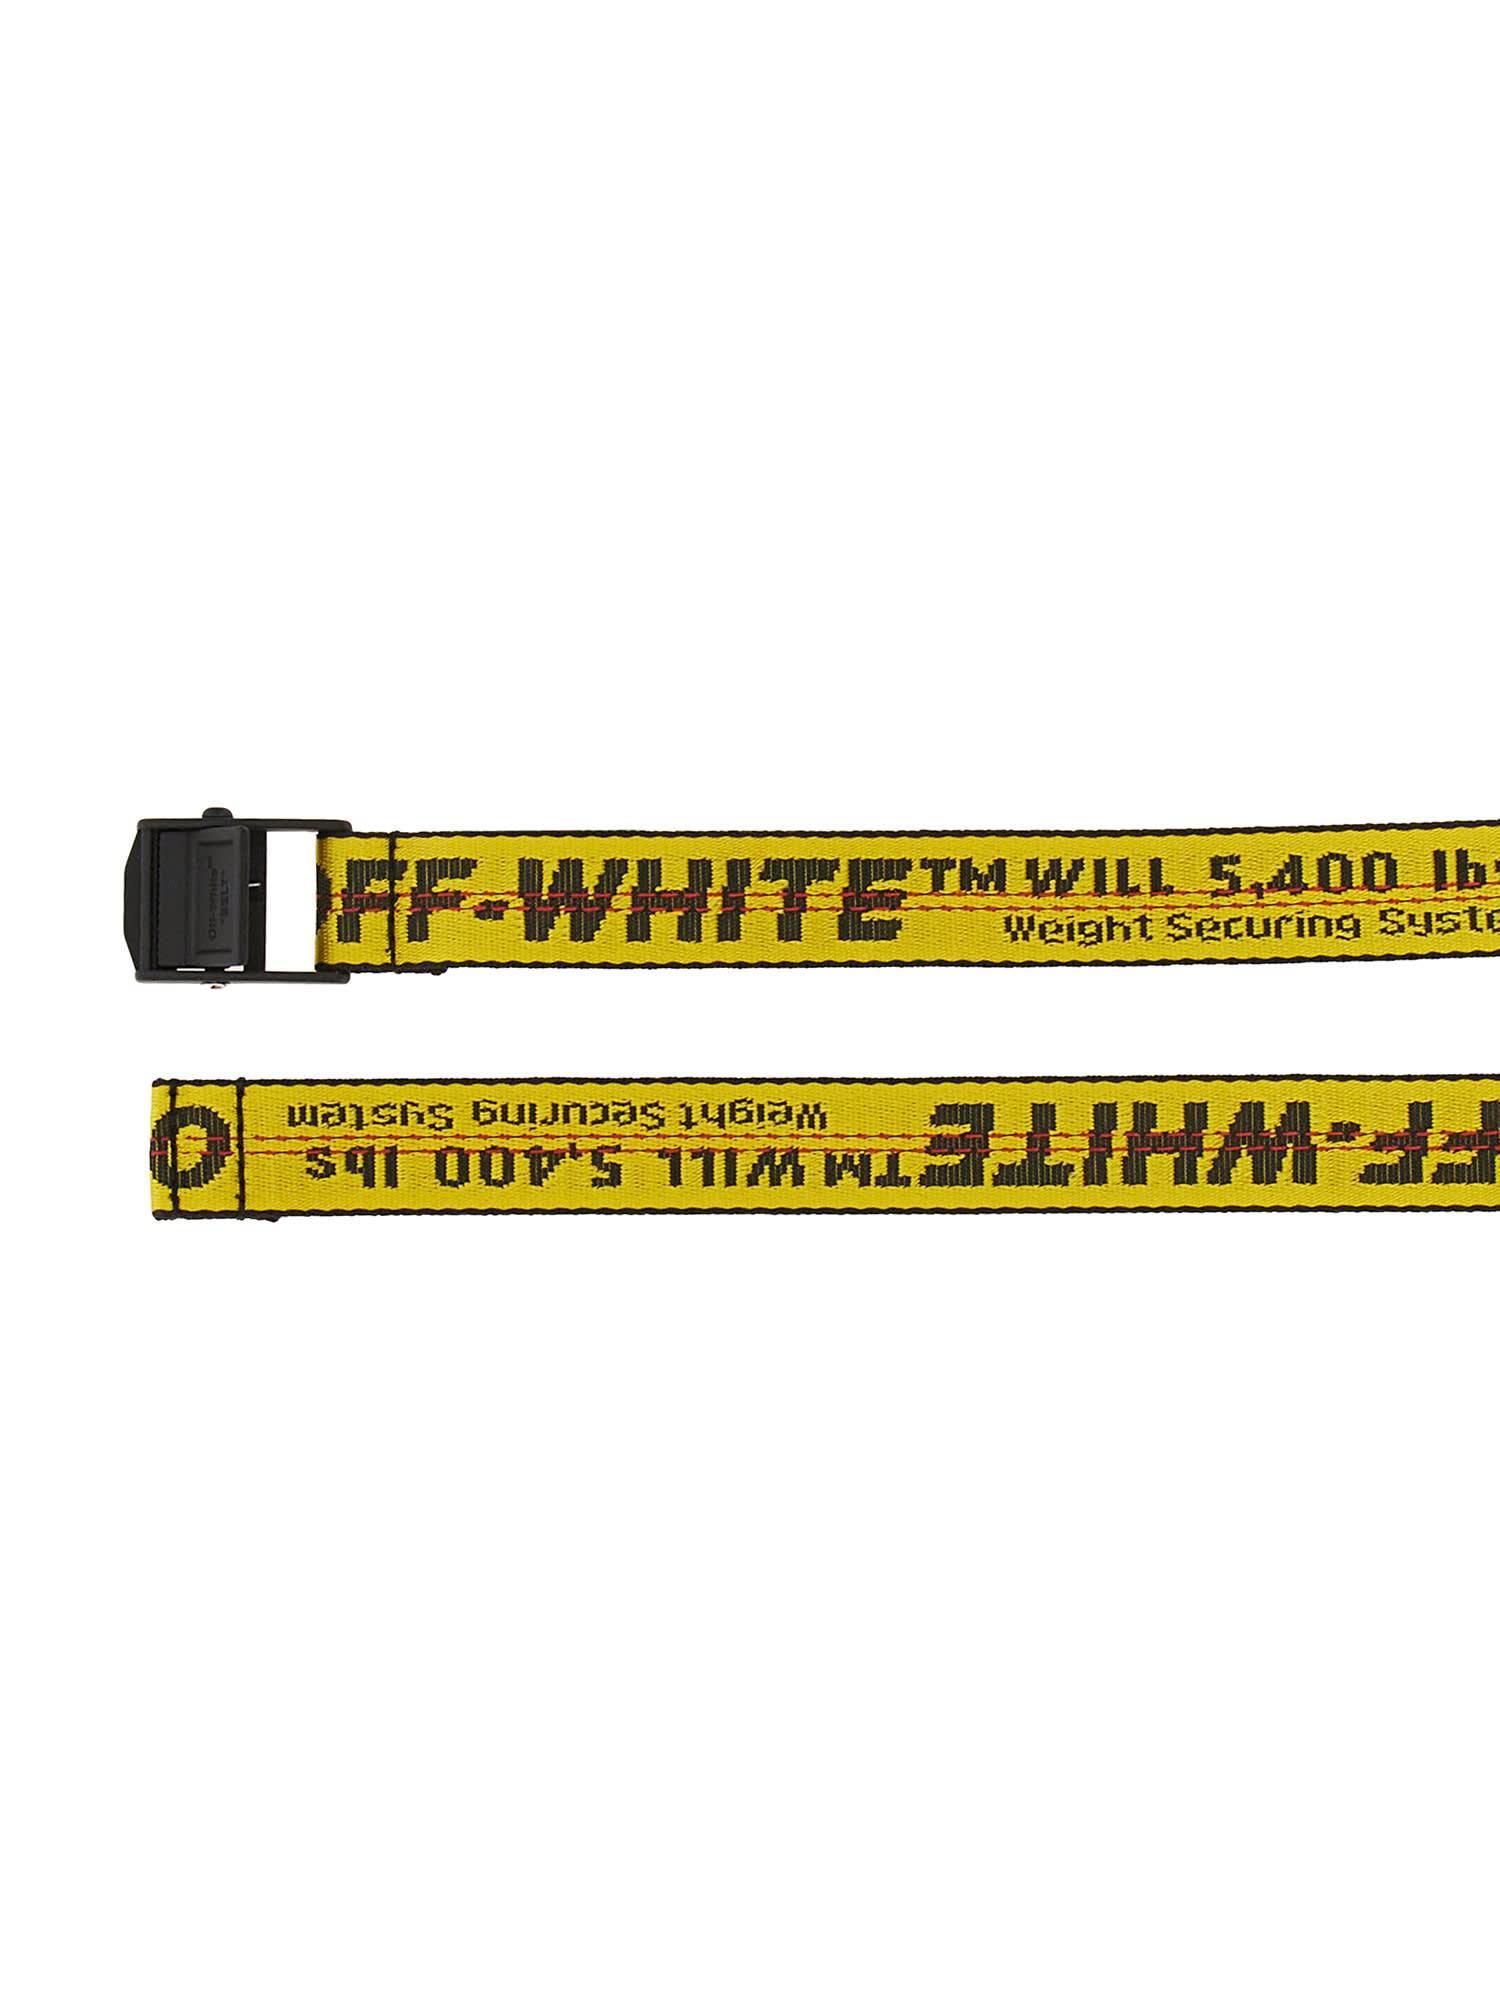 Off-White c/o Virgil Abloh Industrial Belt - Red Belts, Accessories -  WOWVA55636